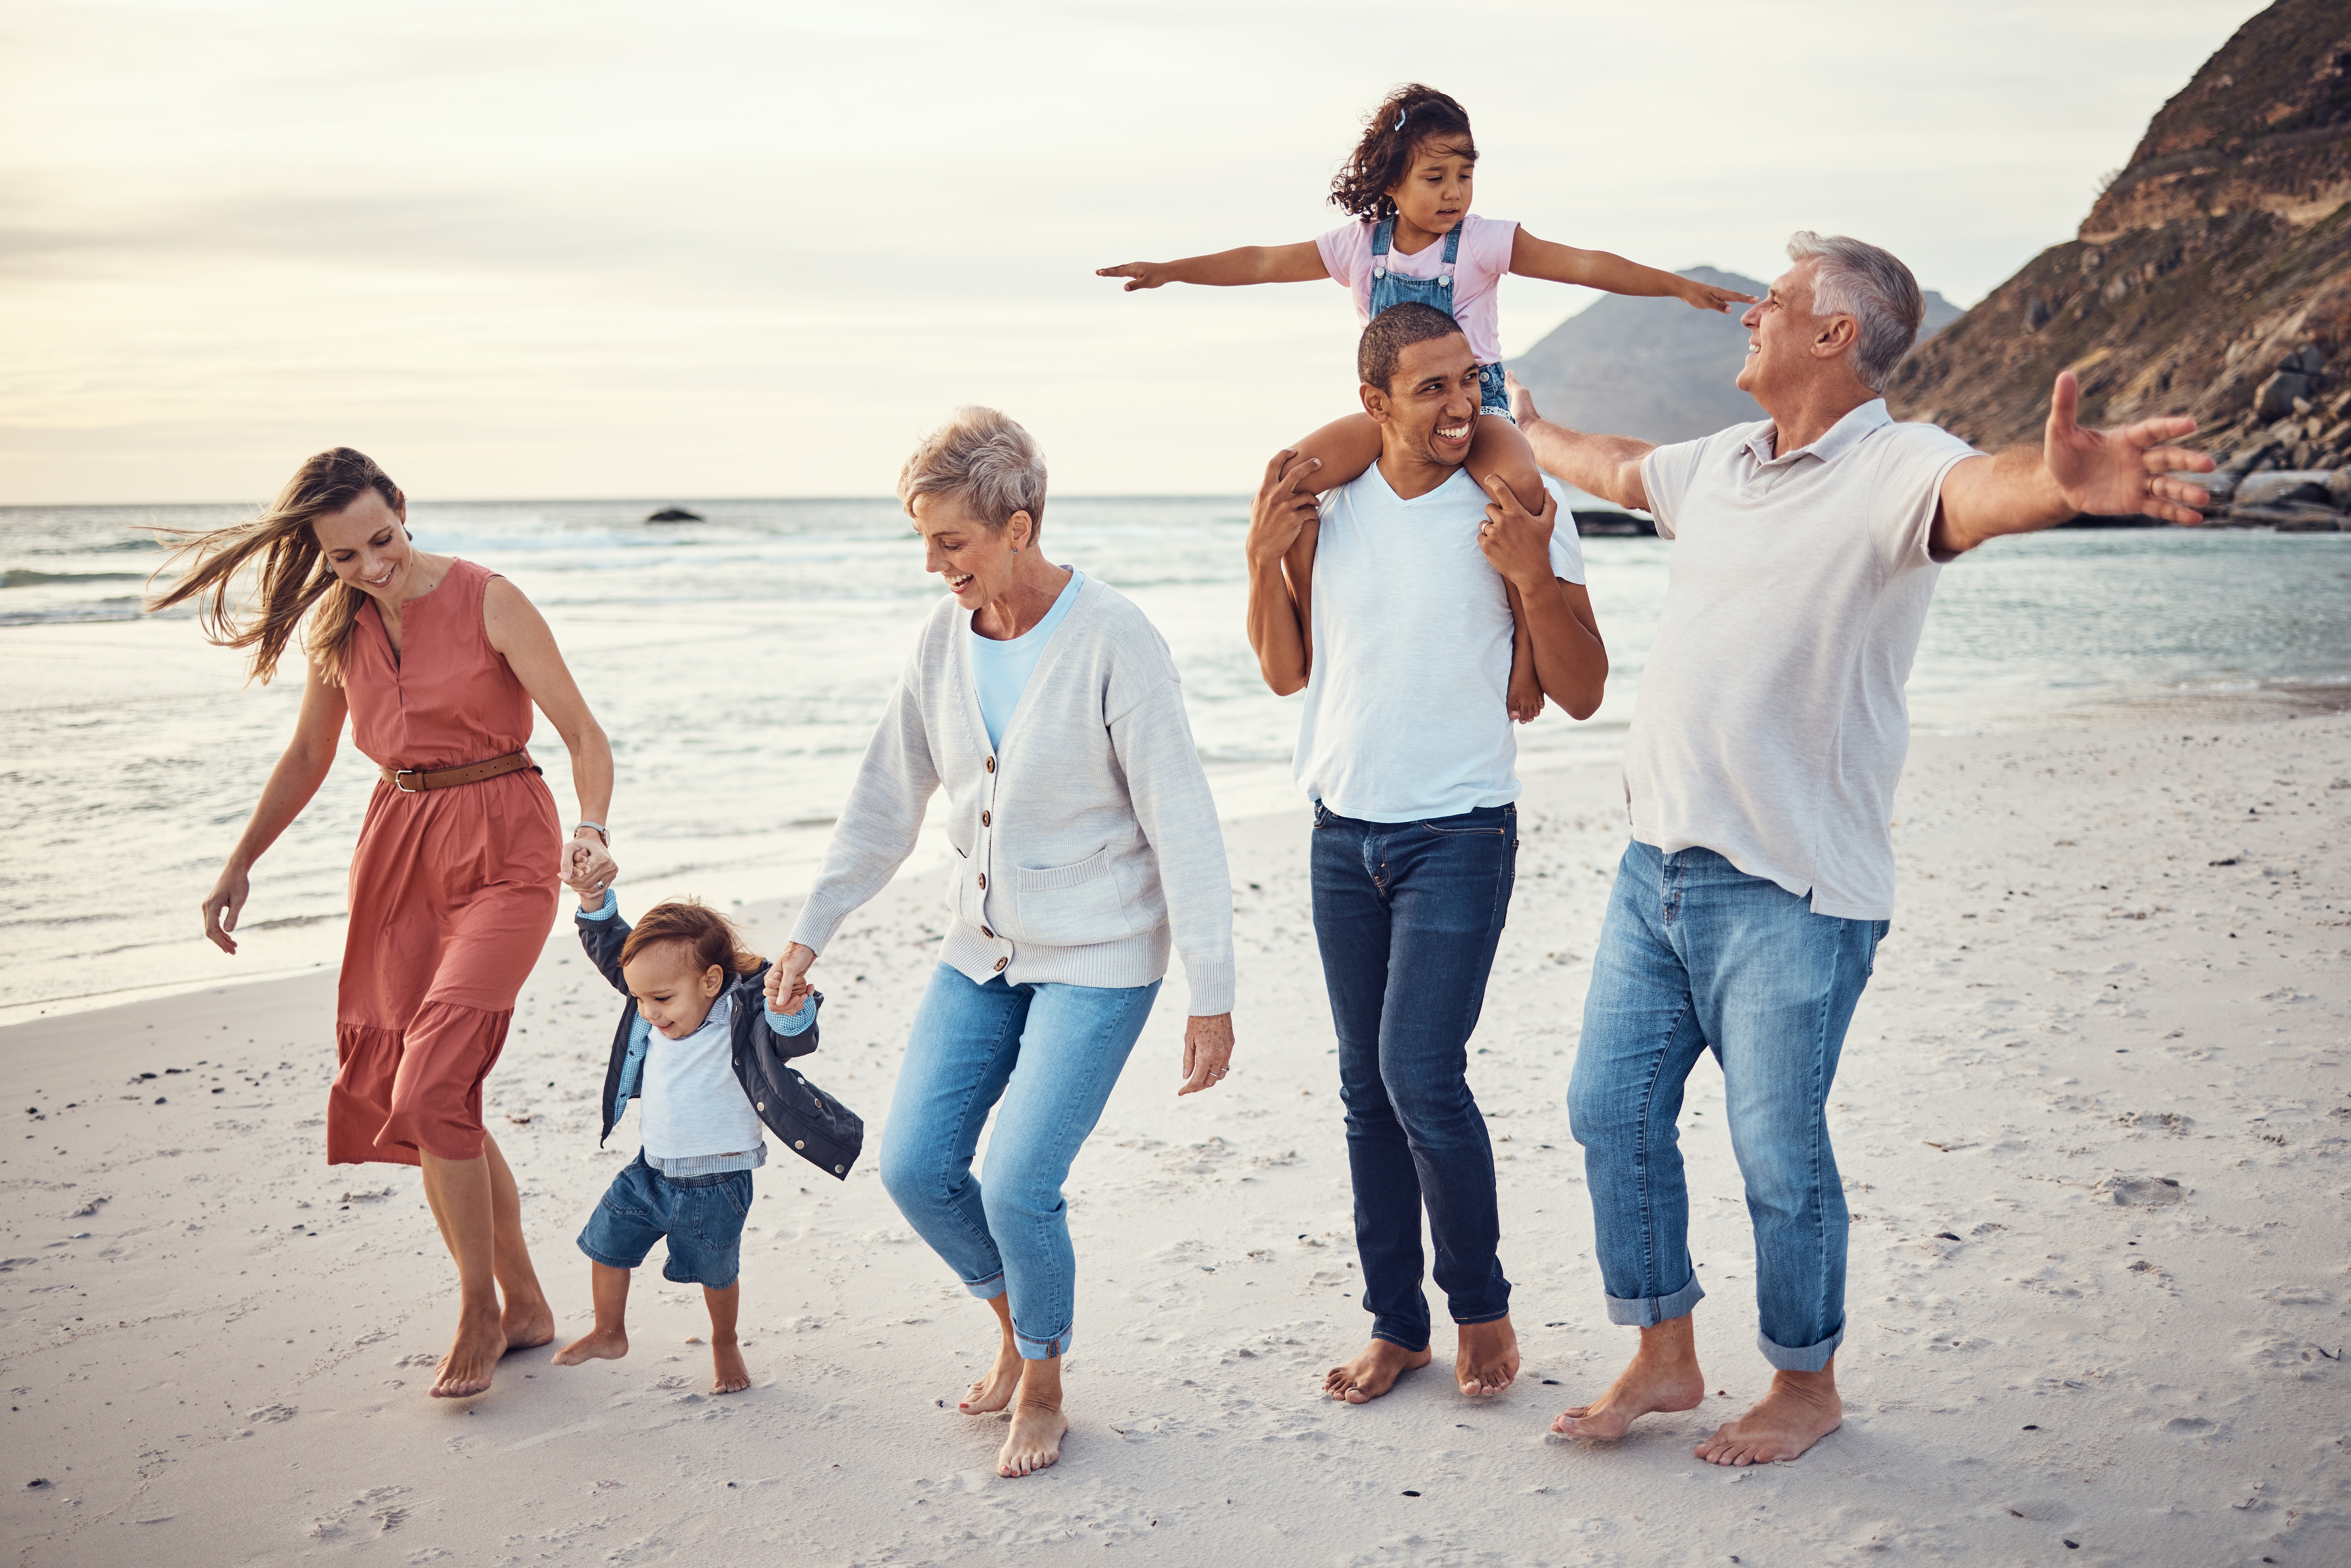 Family on the beach | Shutterstock